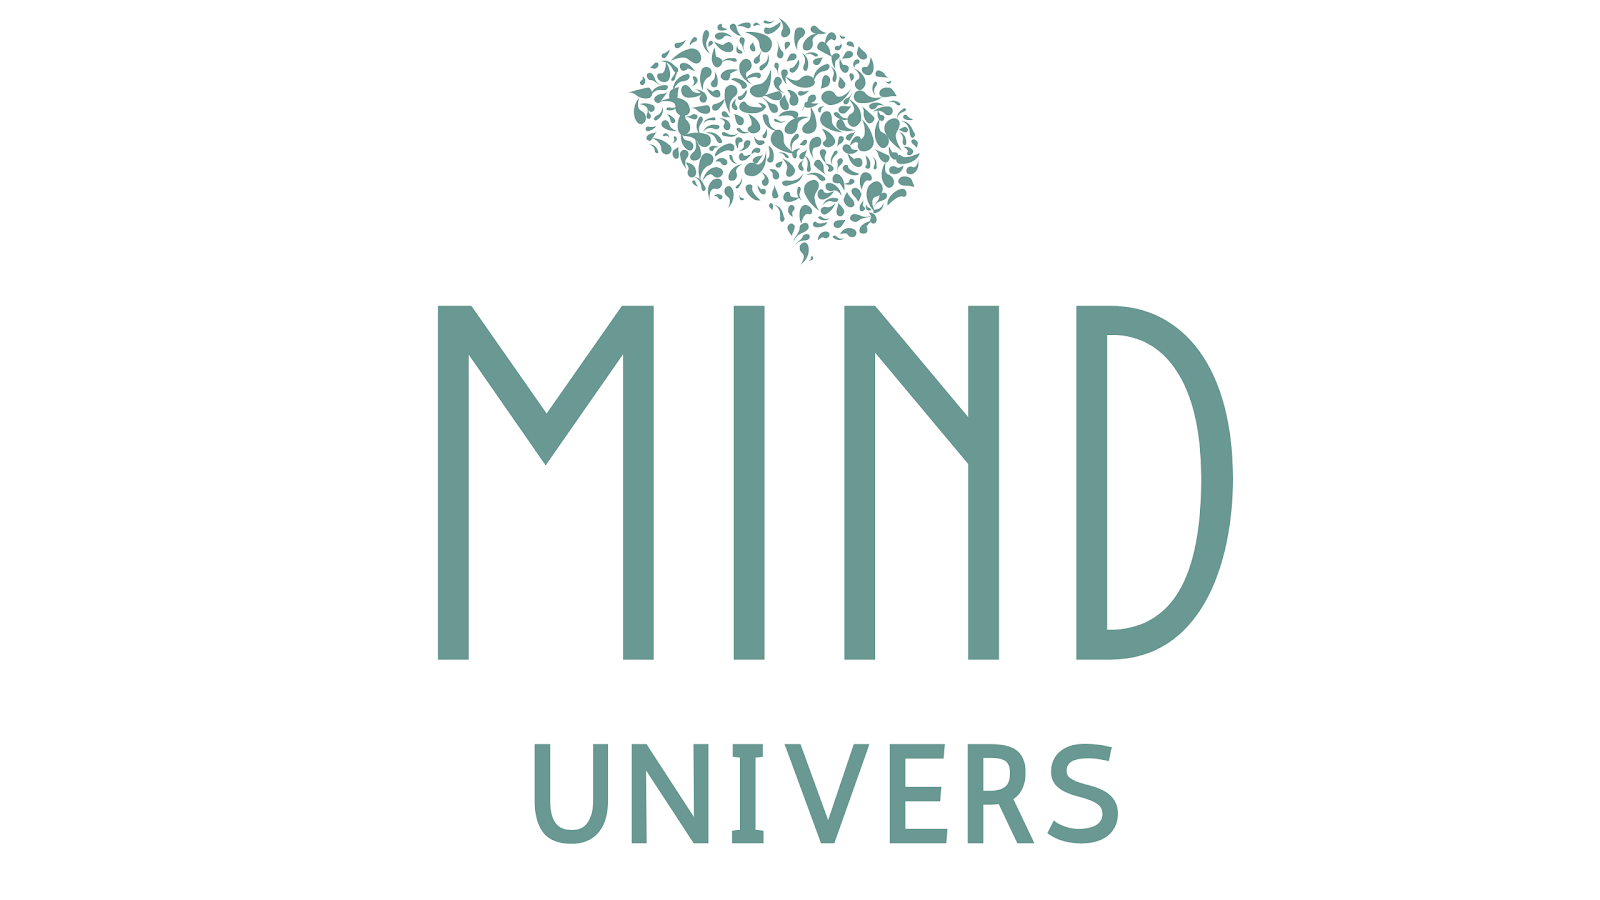 MIND UNIVERS